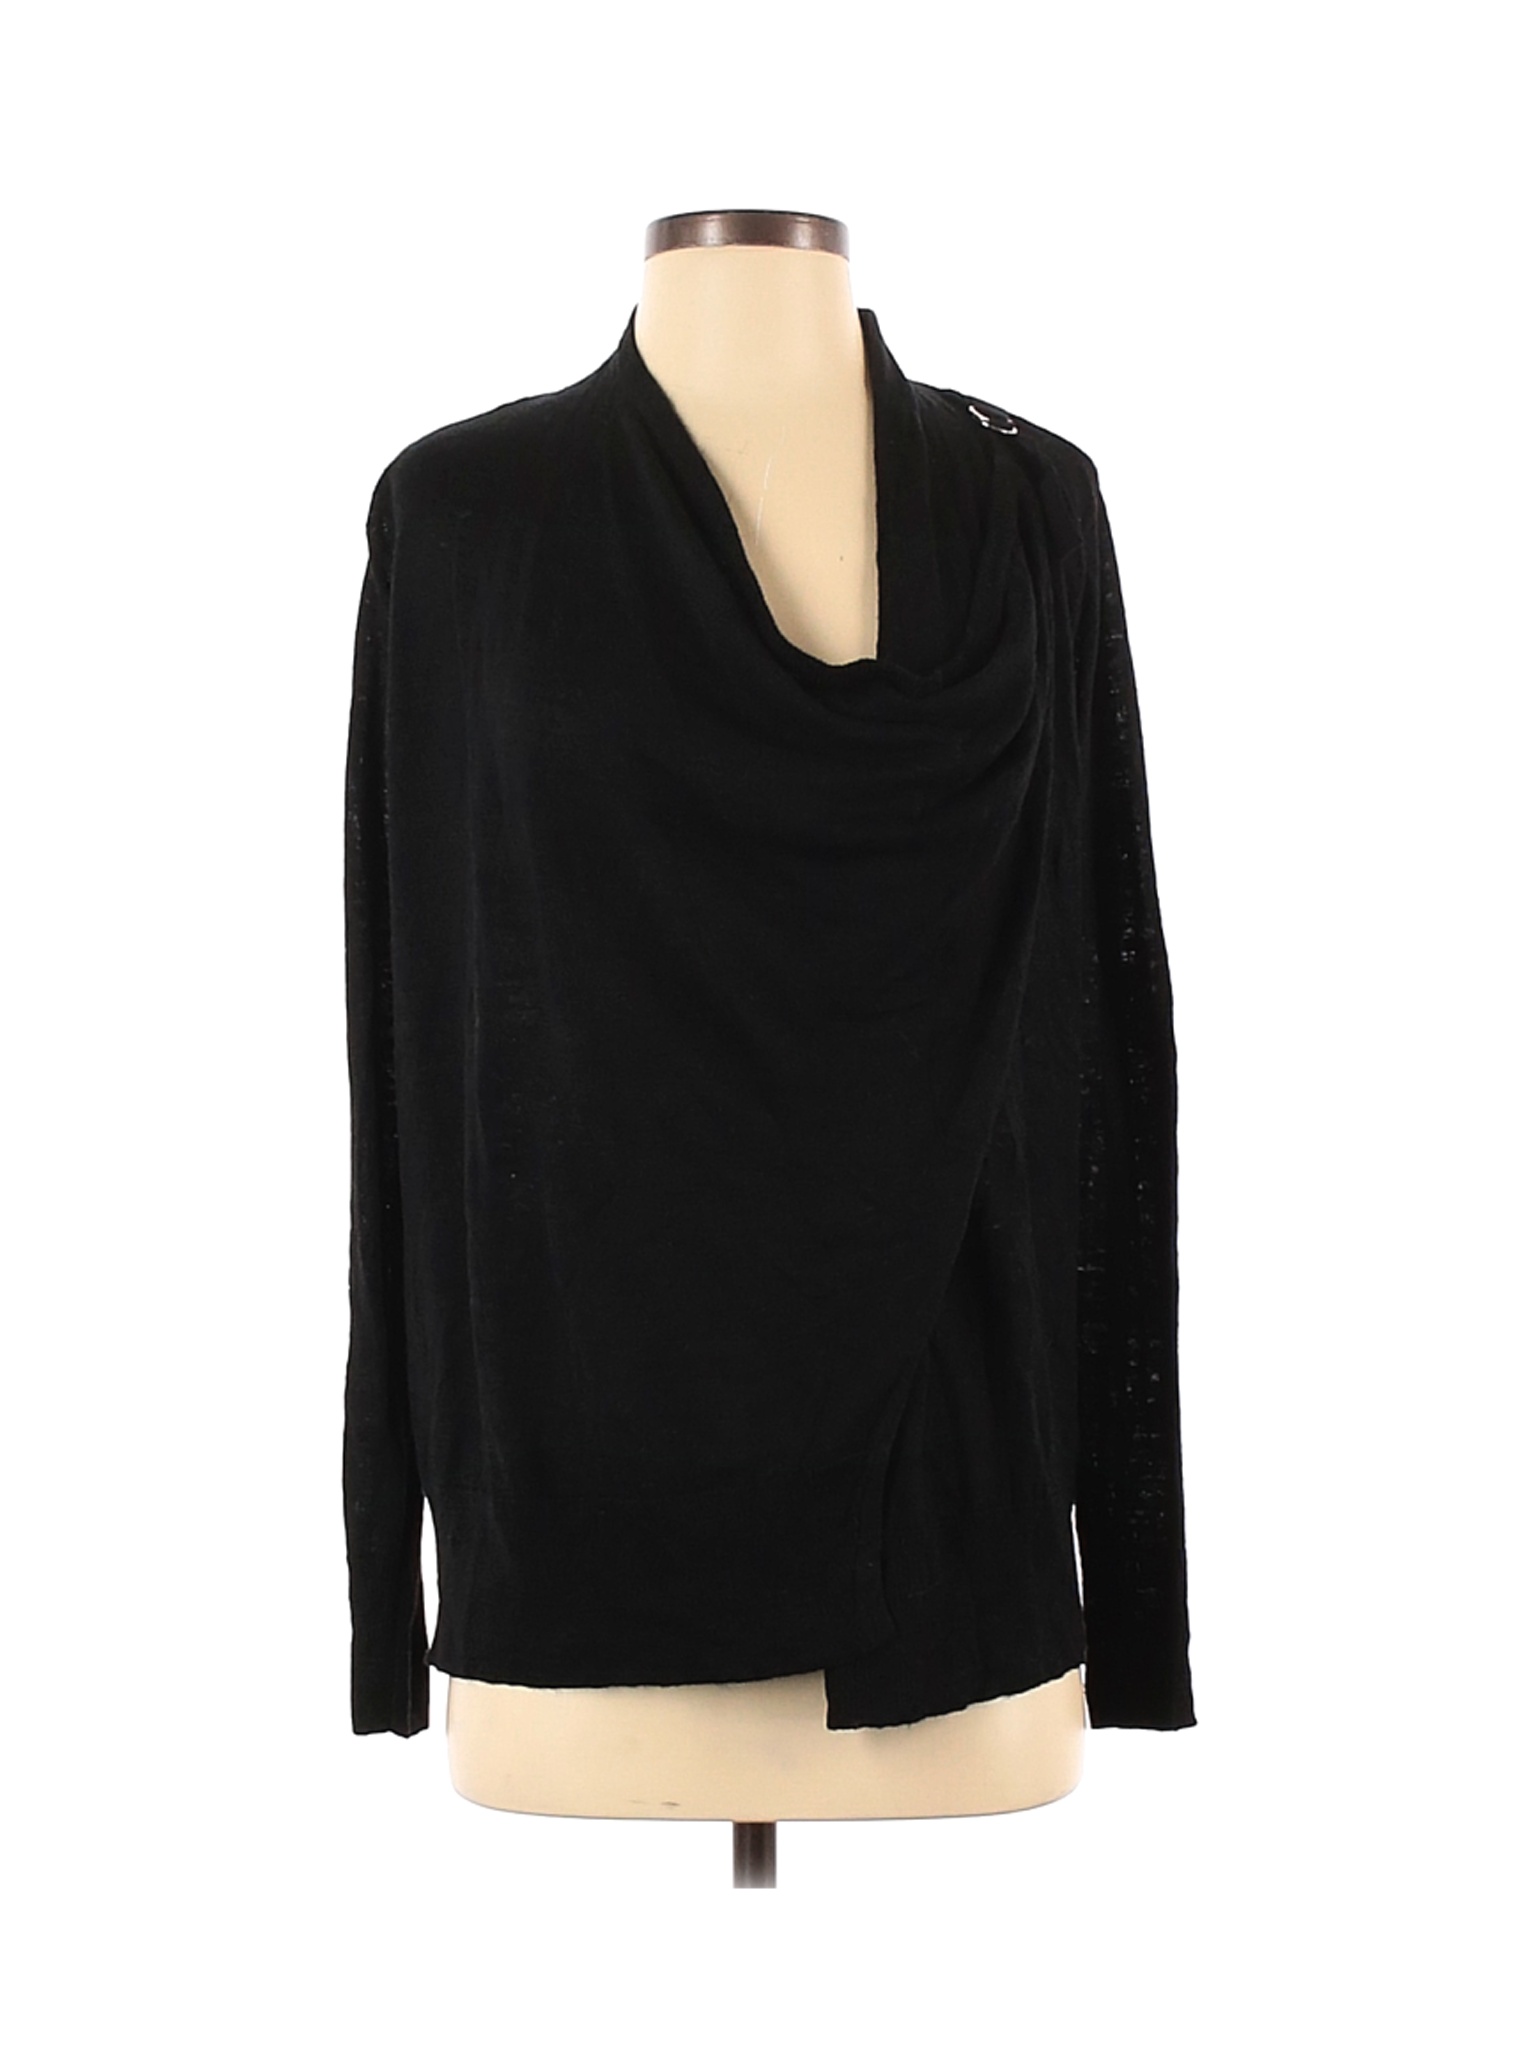 Banana Republic Women Black Pullover Sweater XS | eBay